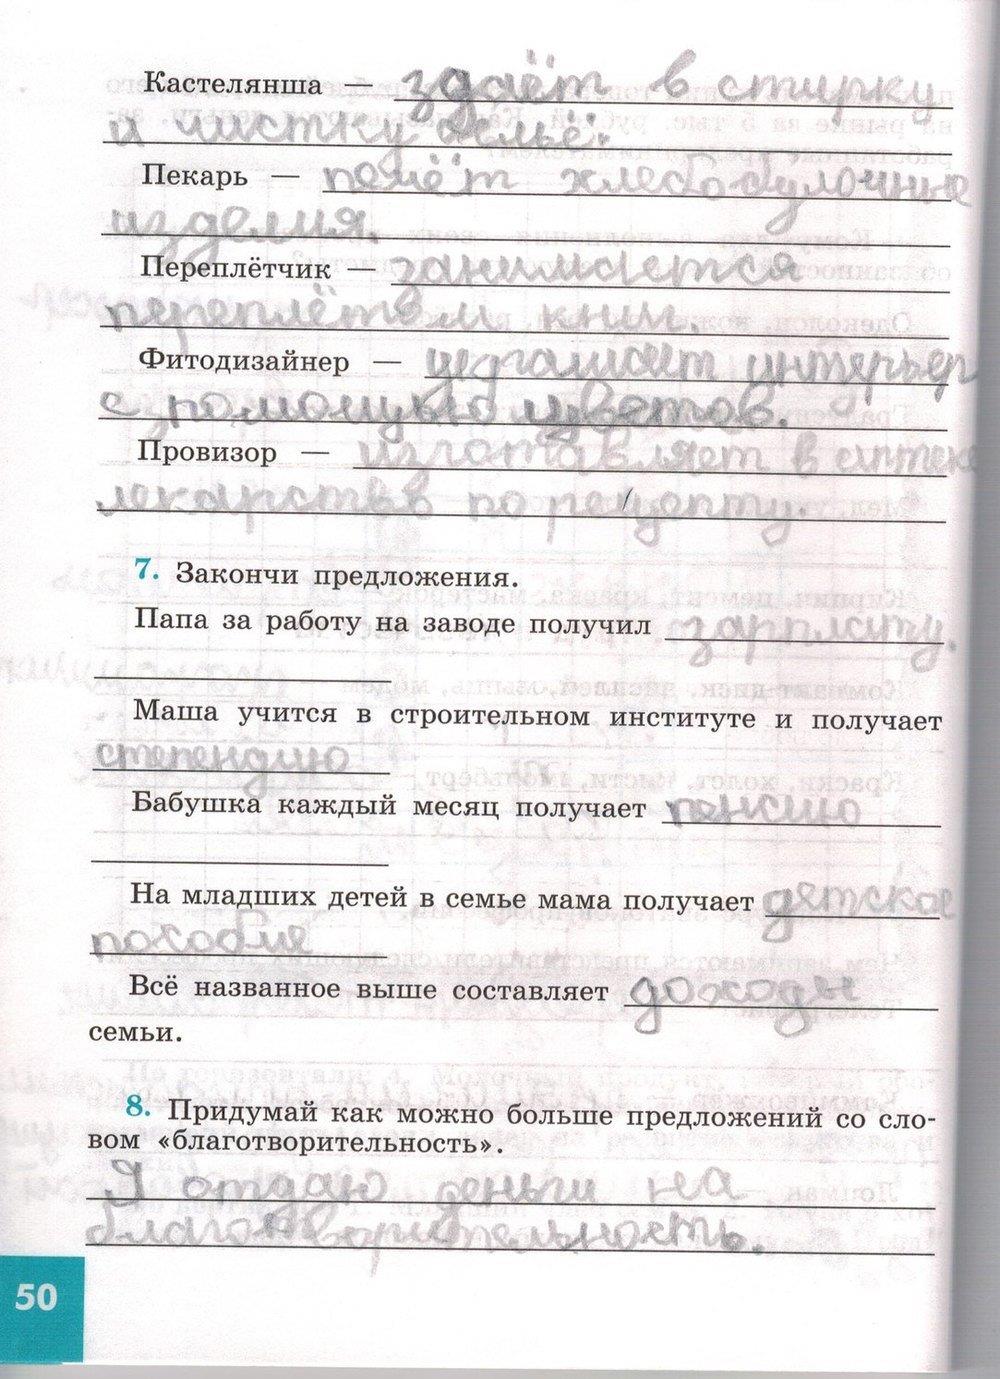 гдз 5 класс рабочая тетрадь страница 50 обществознание Иванова, Хотеенкова